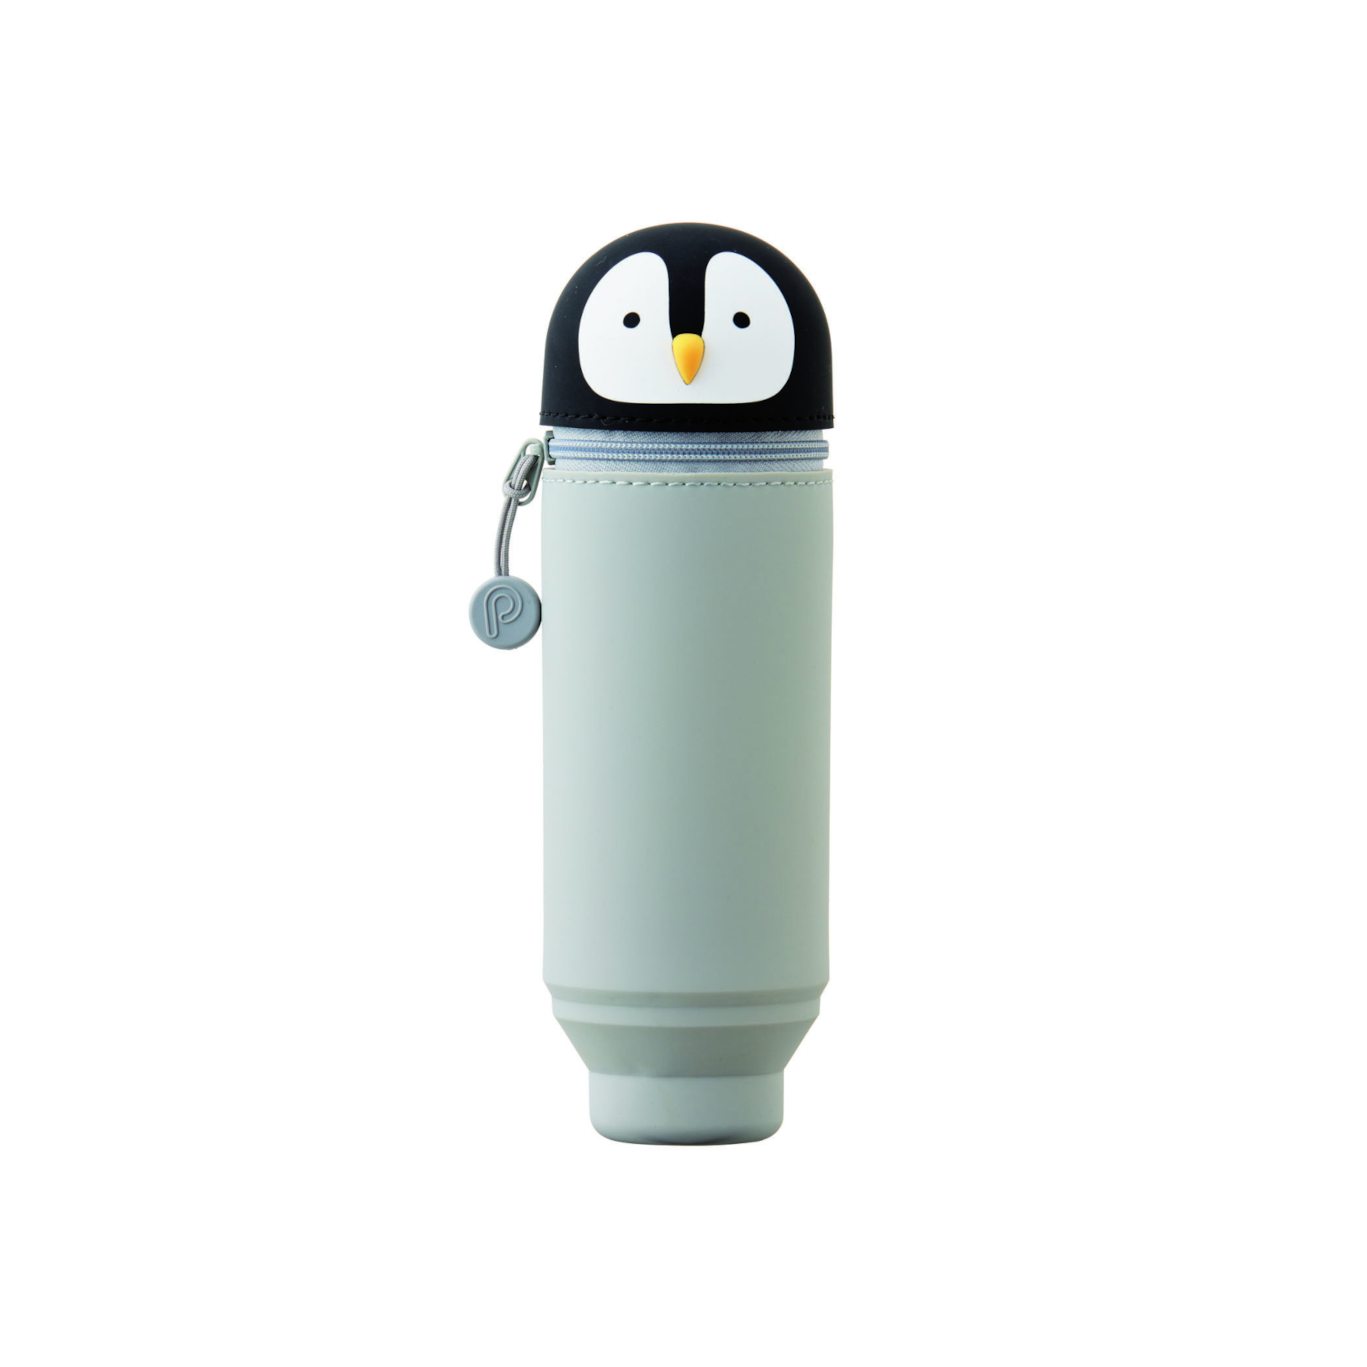 PuniLabo Stand Up Pen Case - Penguin